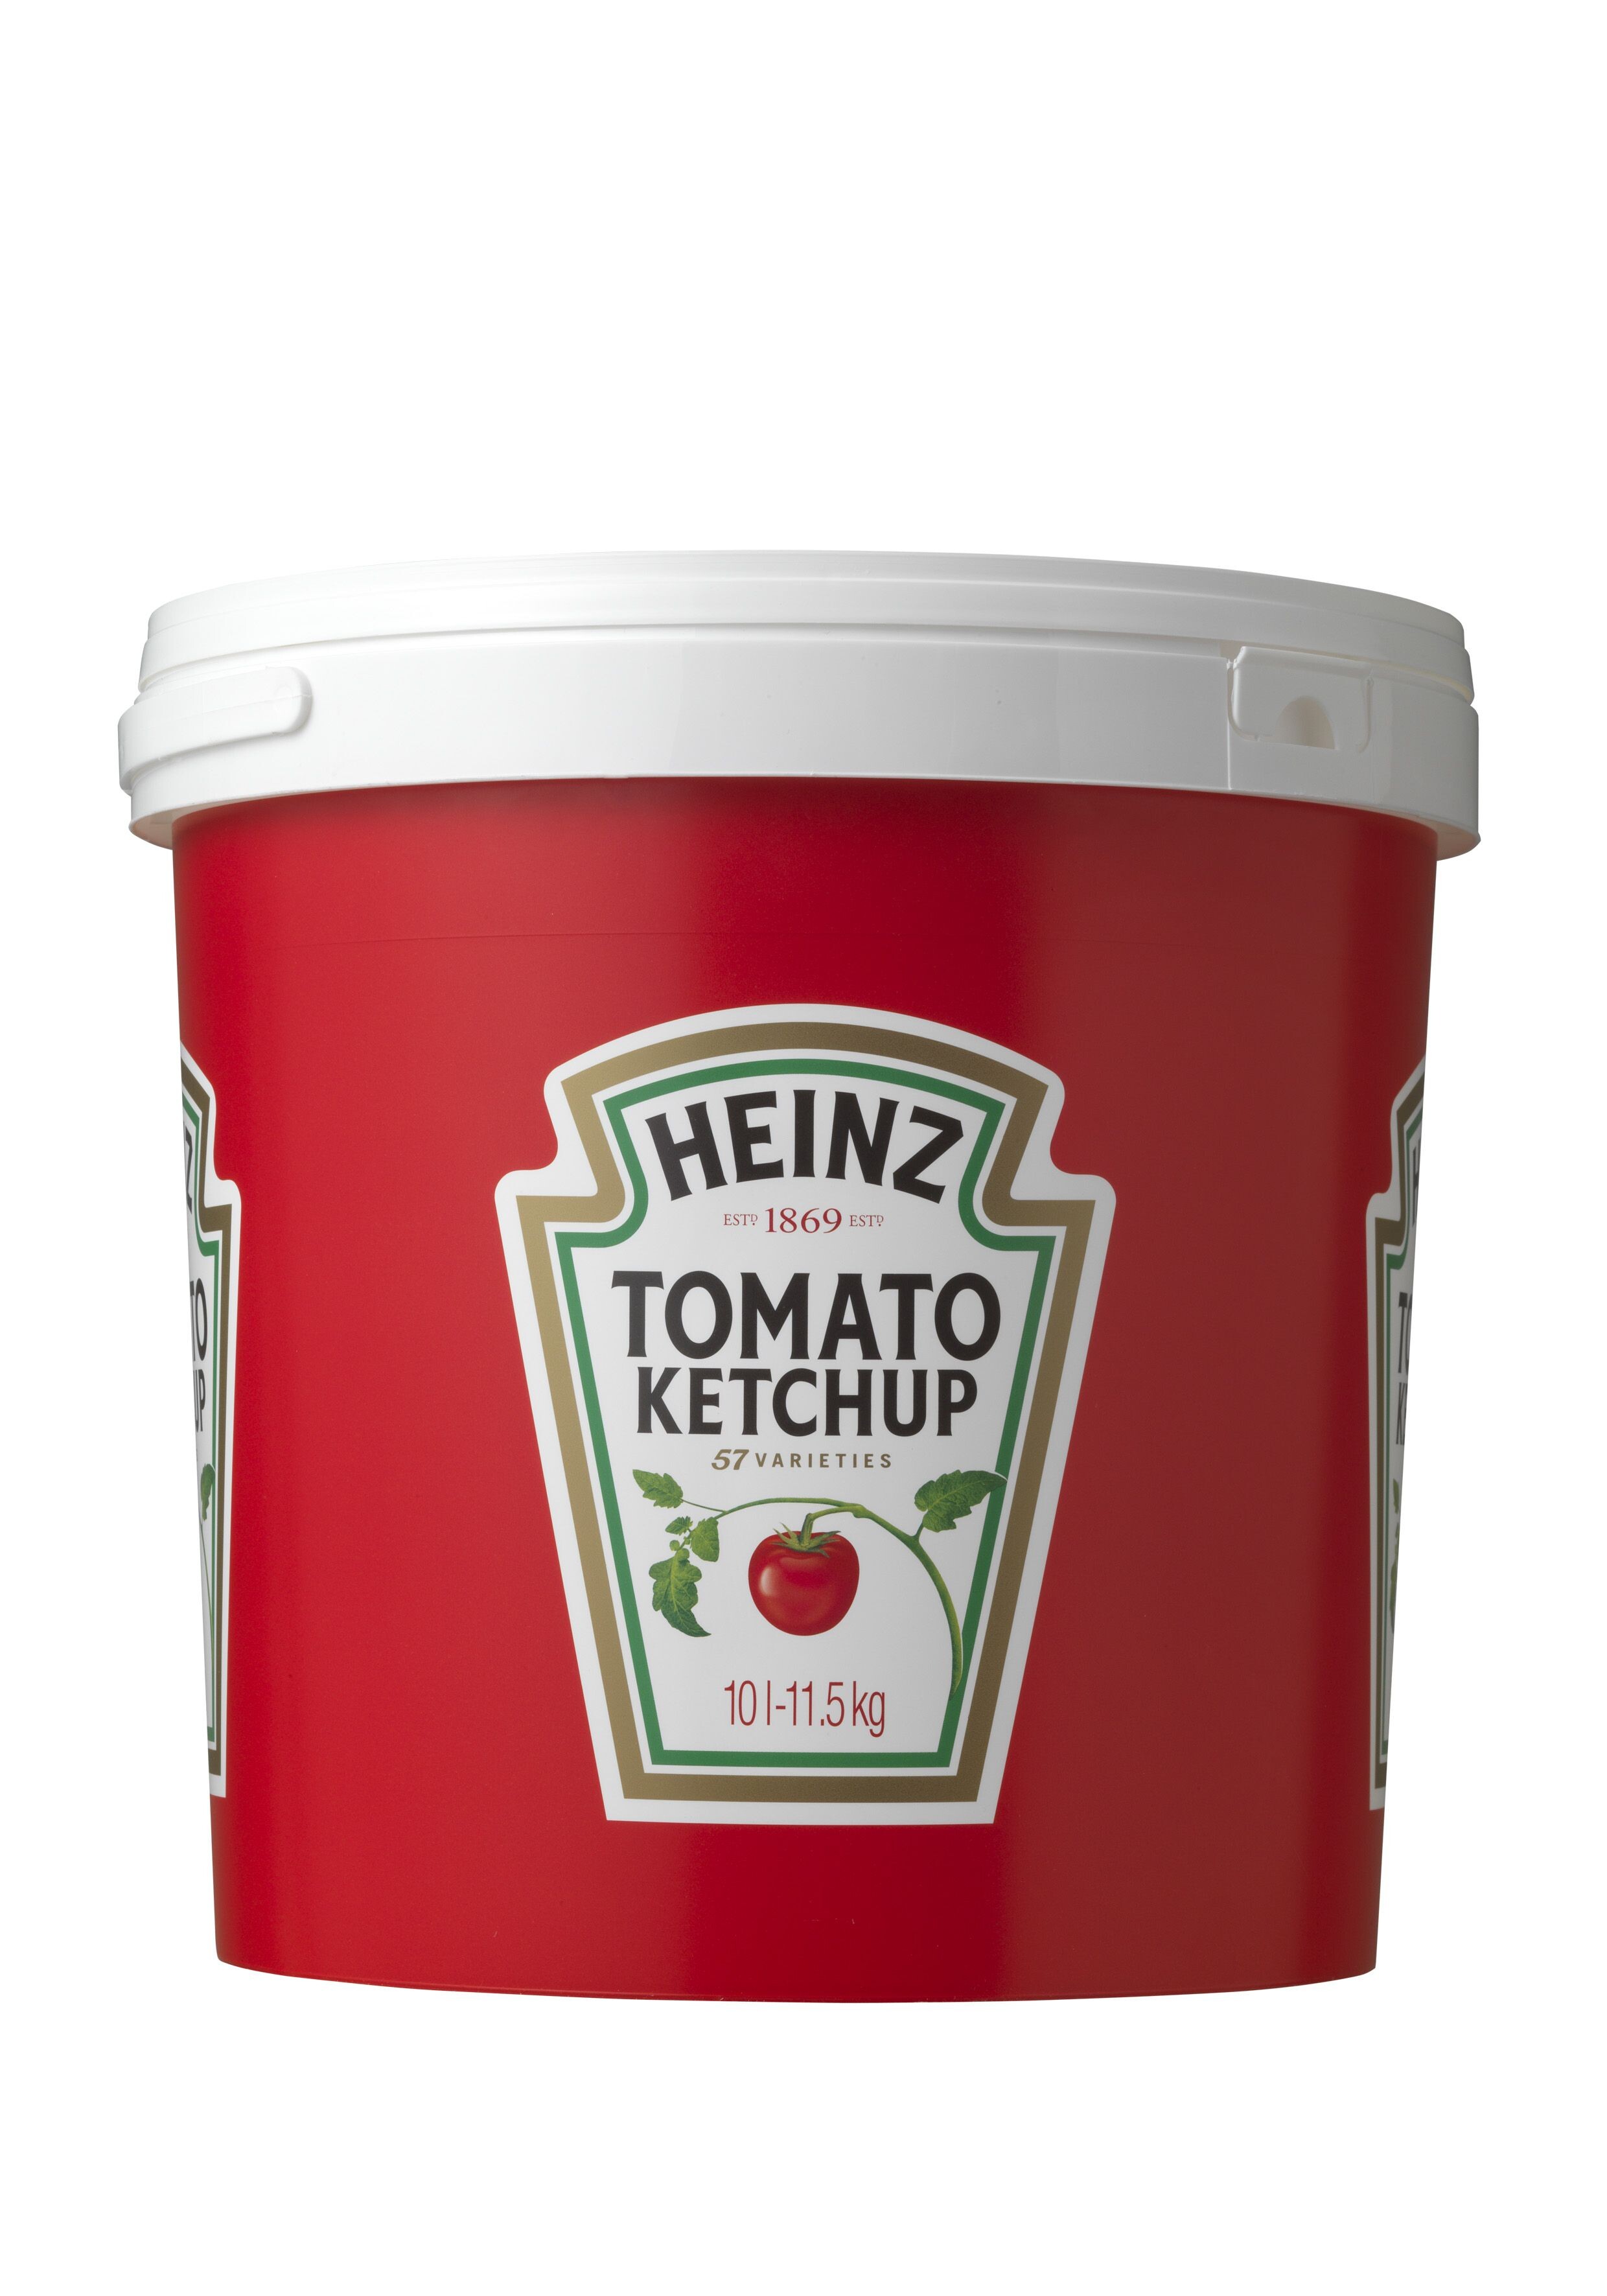 Heinz tomato ketchup 10L bucket